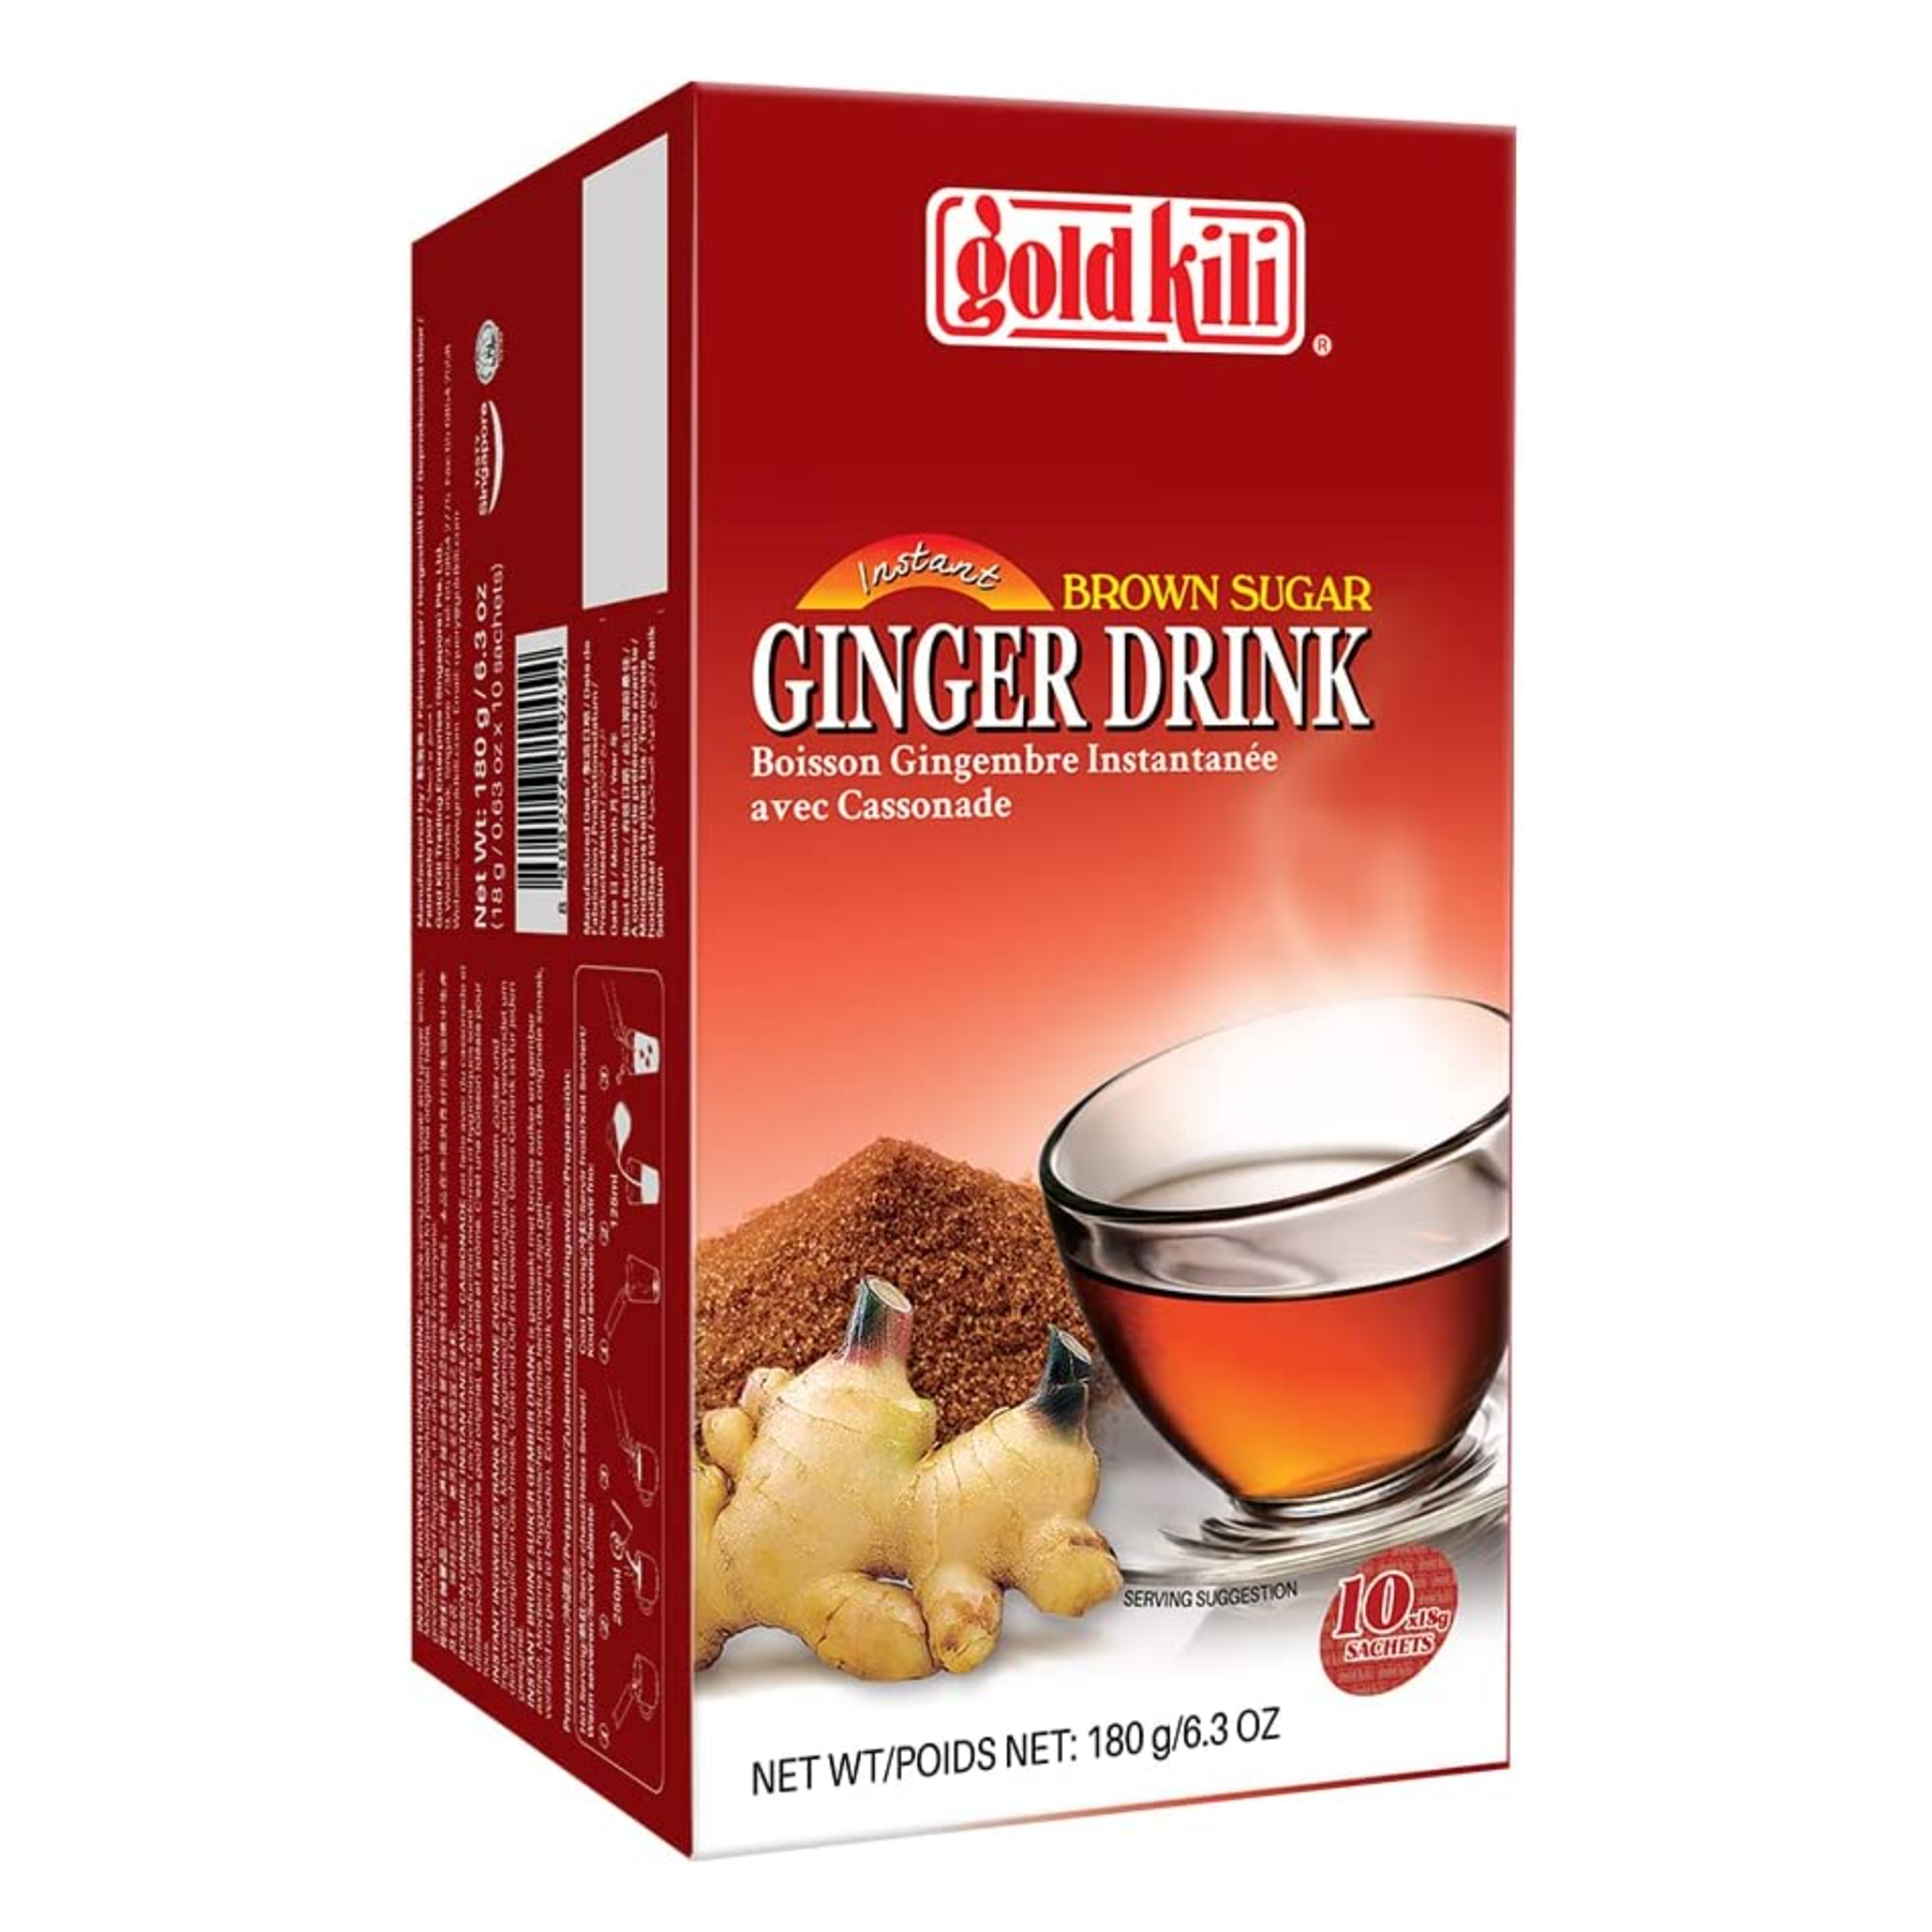 Instant Ginger Drink Brown Sugar (10 sachets) 180g Box by Gold Kili